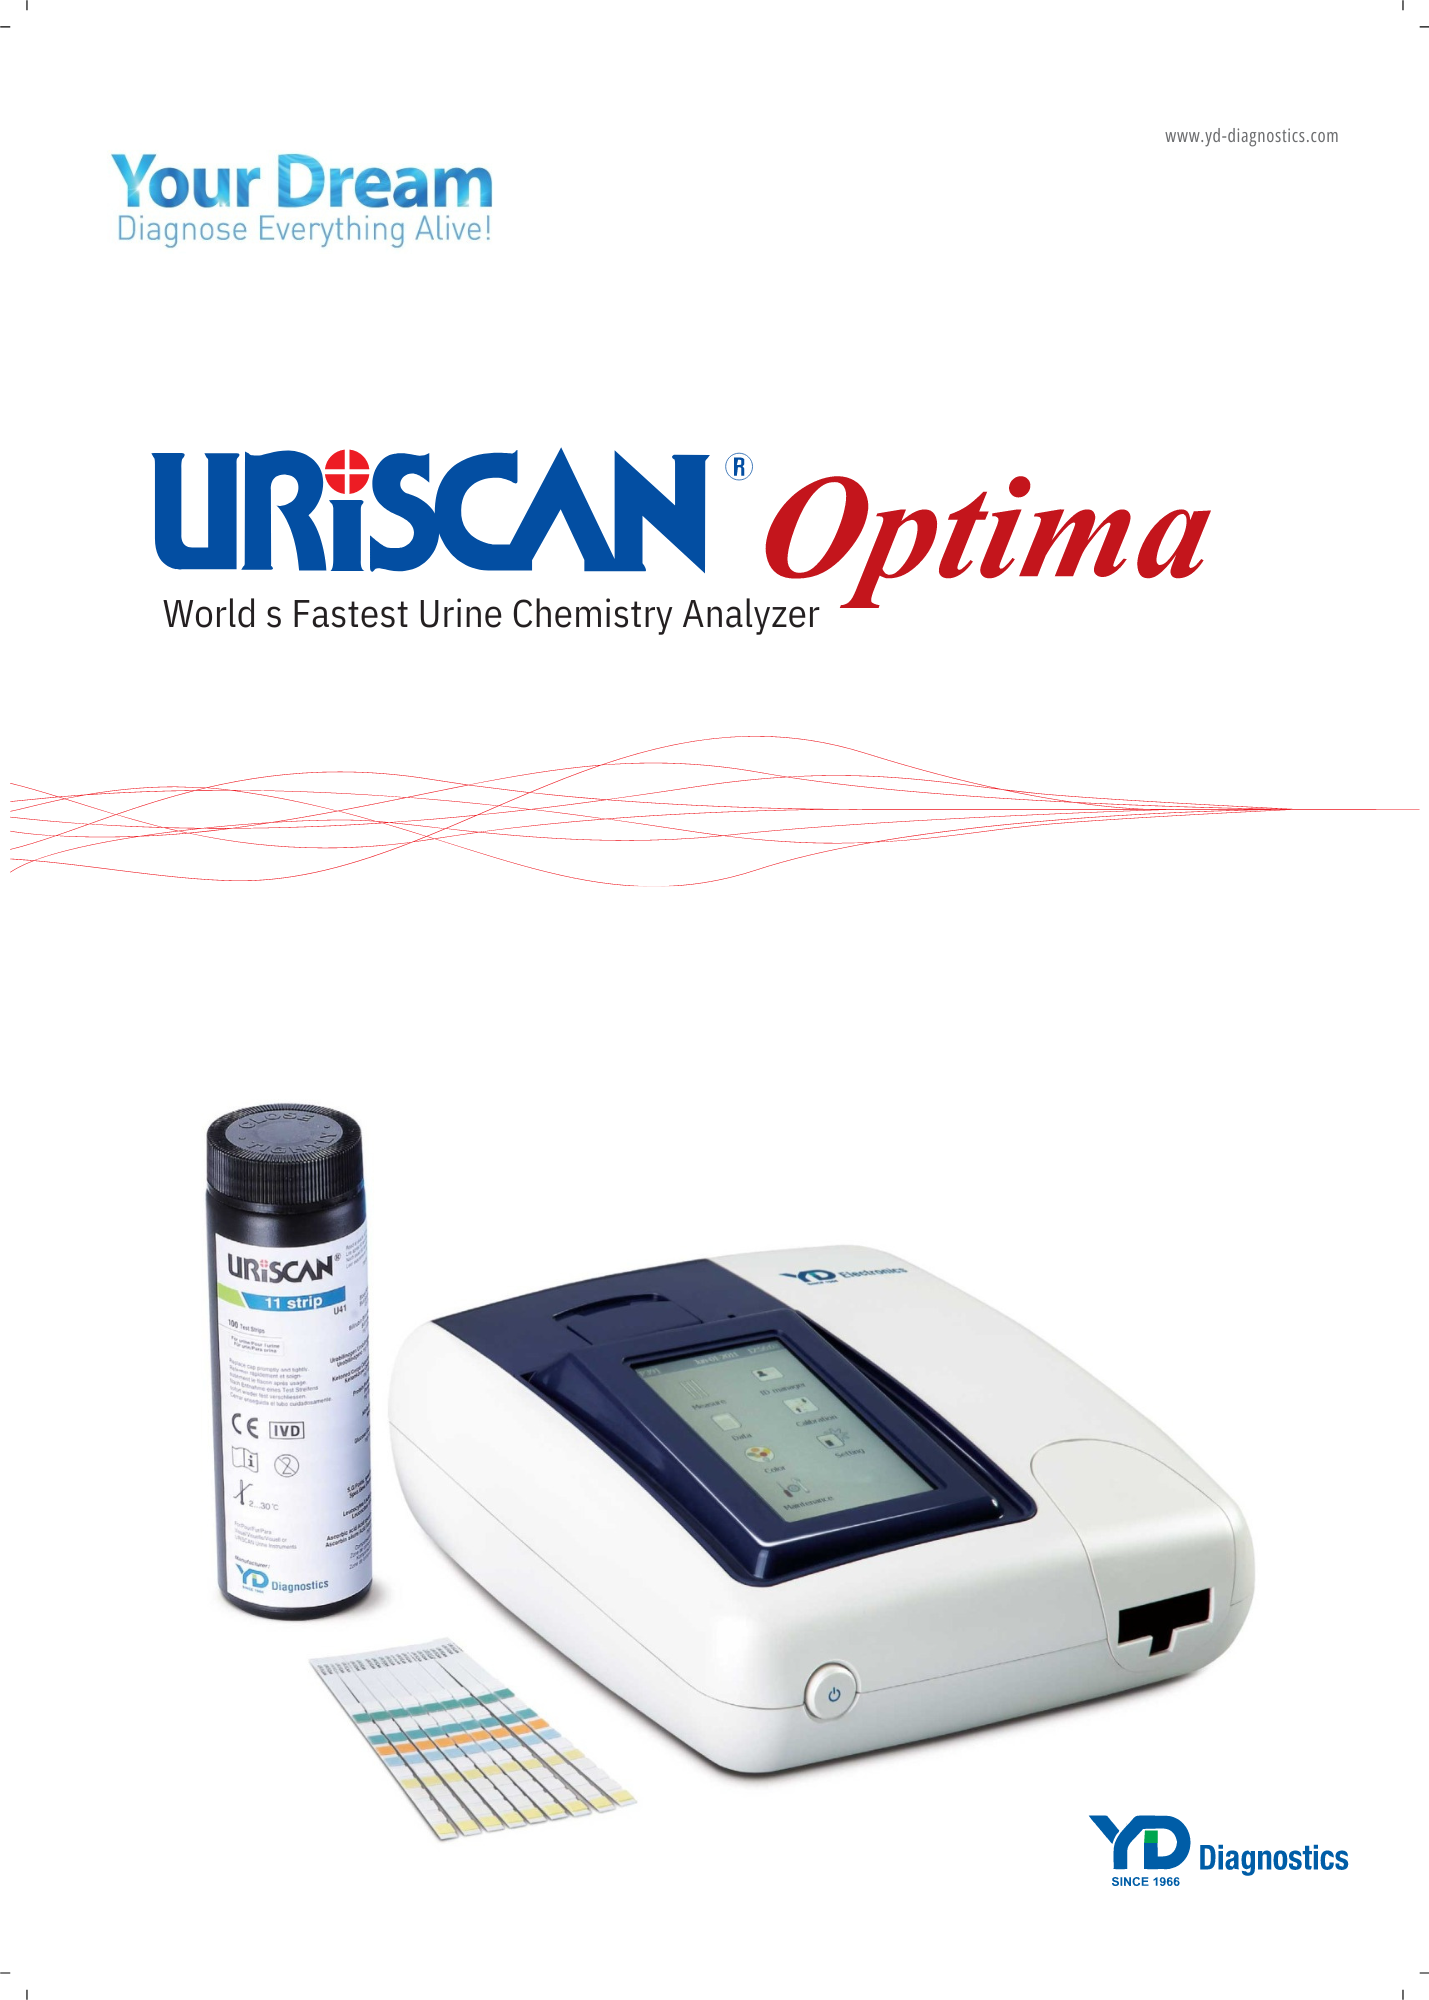 Uriscan Optima Urine analyzers